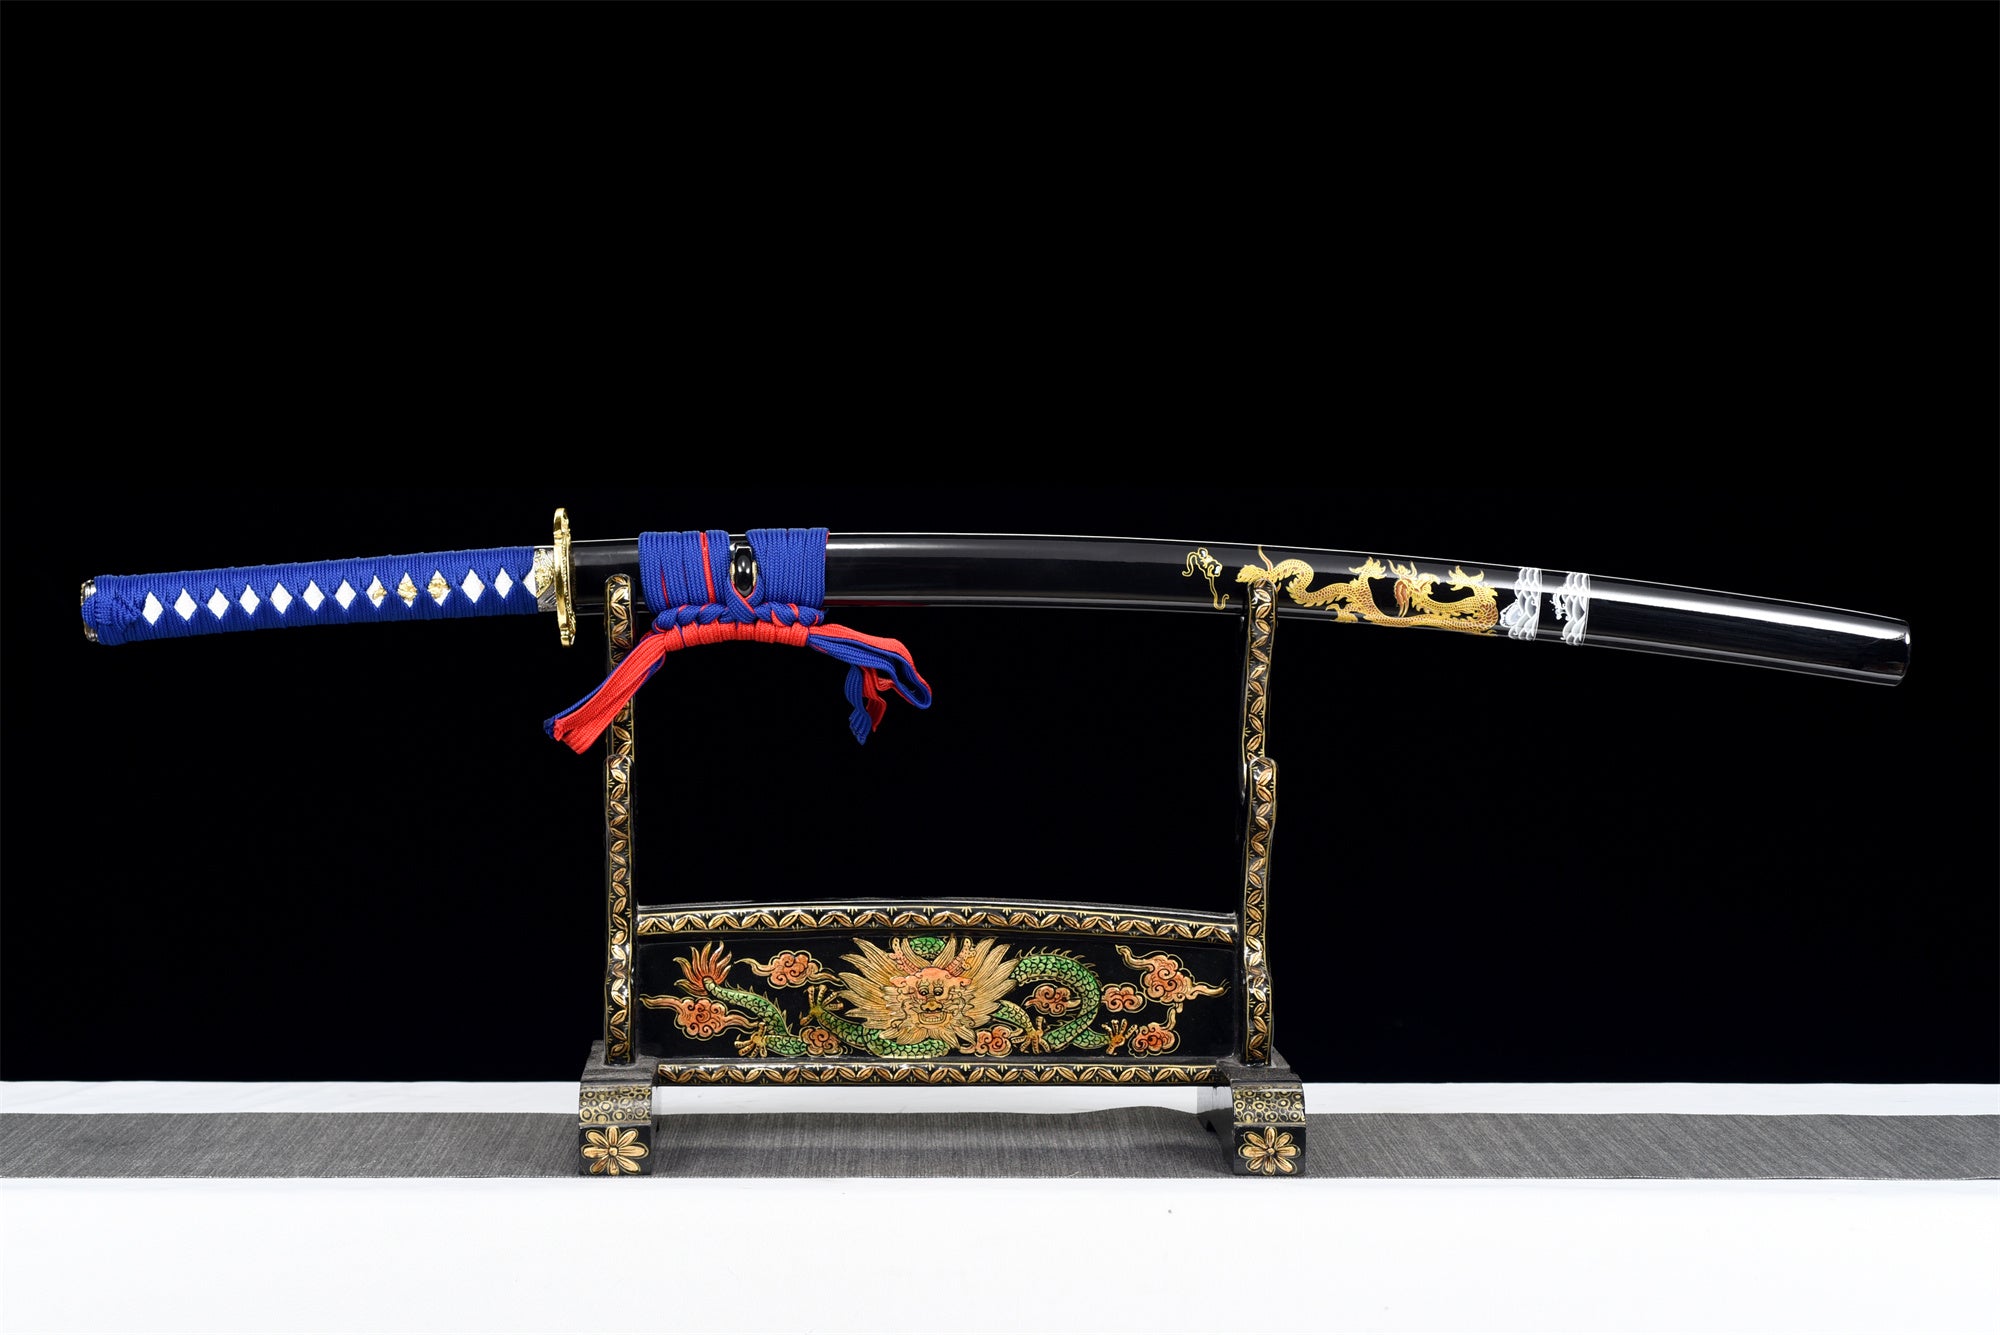 Water Dragon King Katana,Baked Blue Blade,Japanese Samurai Sword,Real Handmade Katana,High Manganese Steel